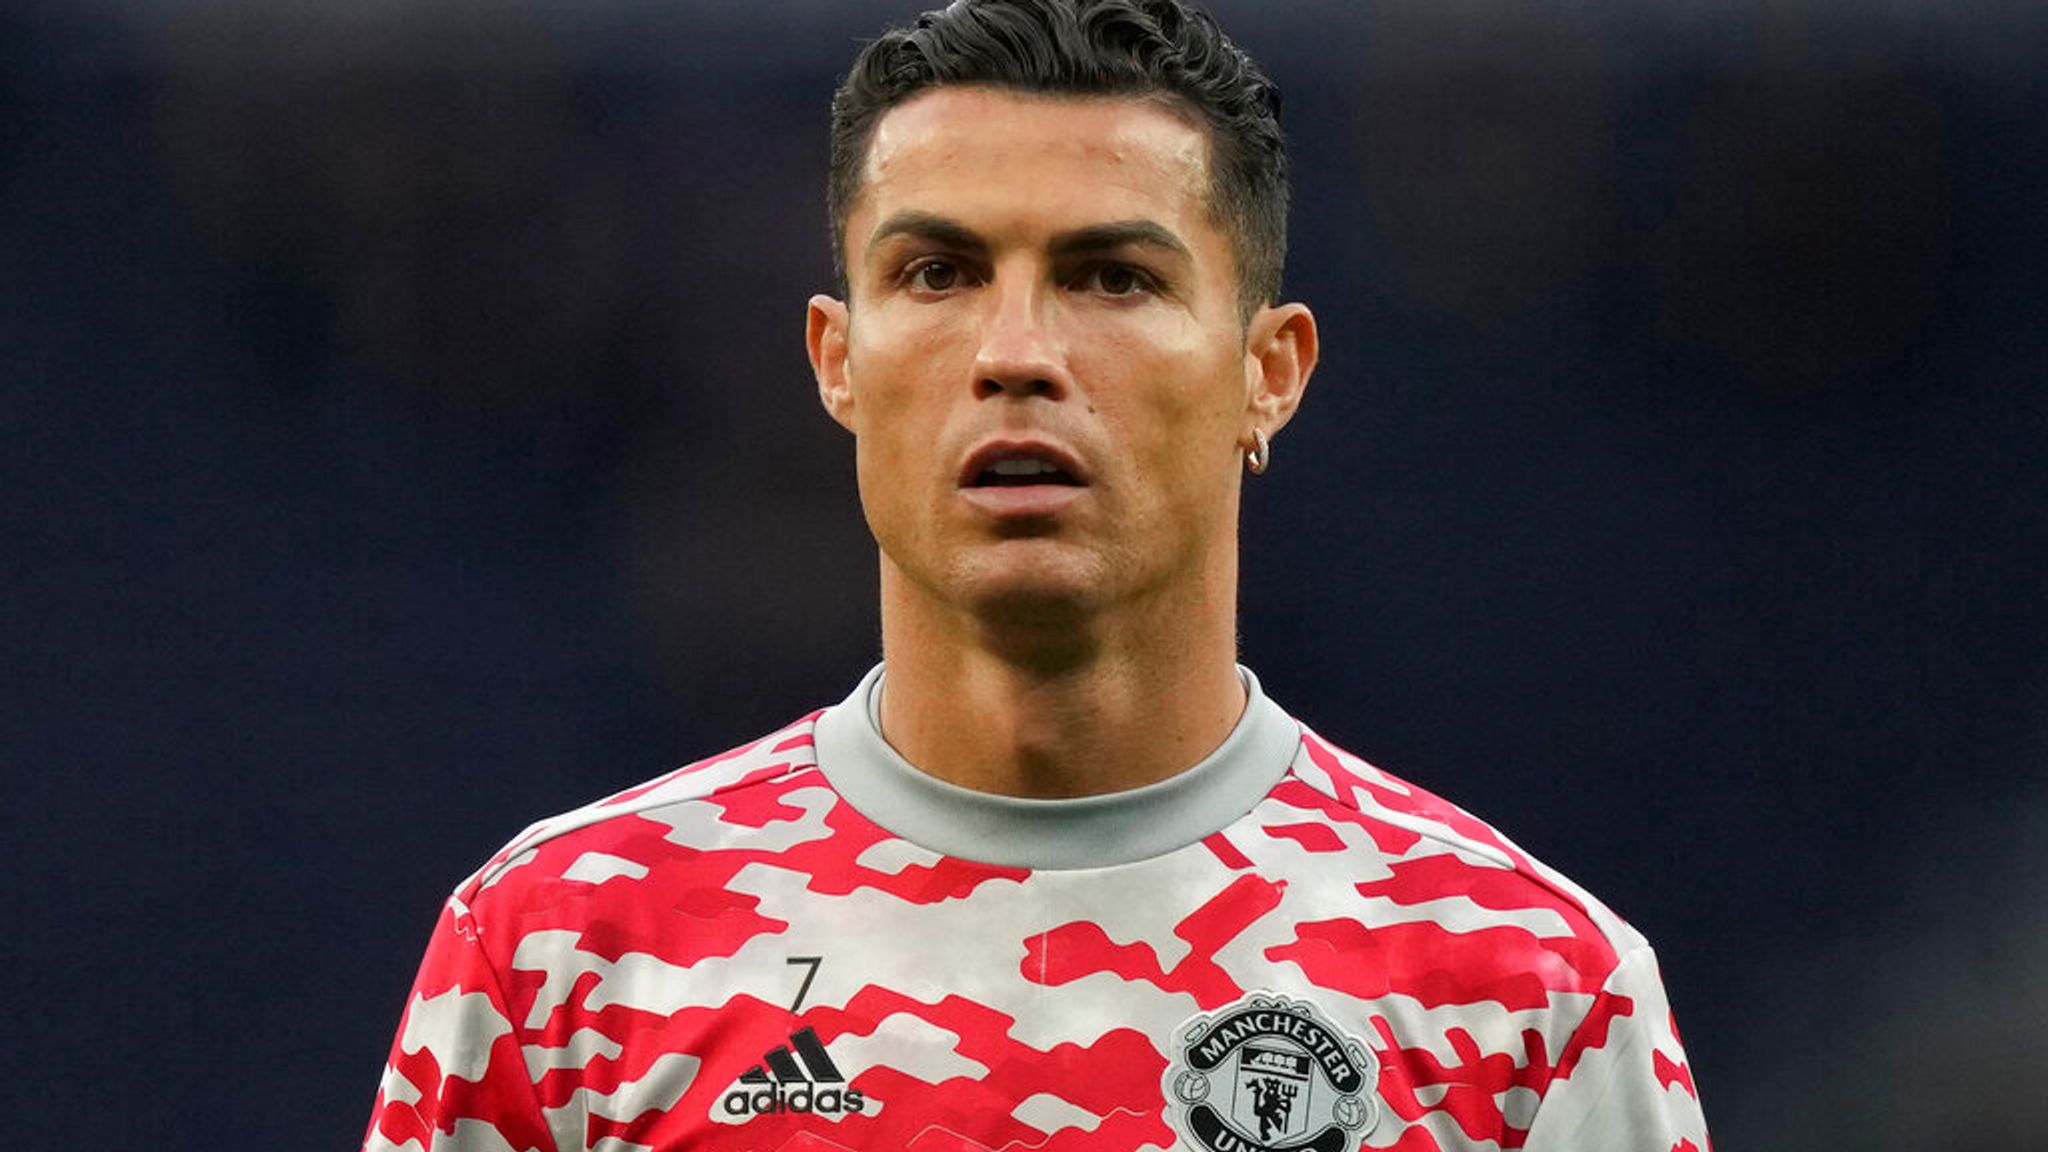 Cristiano Ronaldo Return to Manchester United Following Son's Death